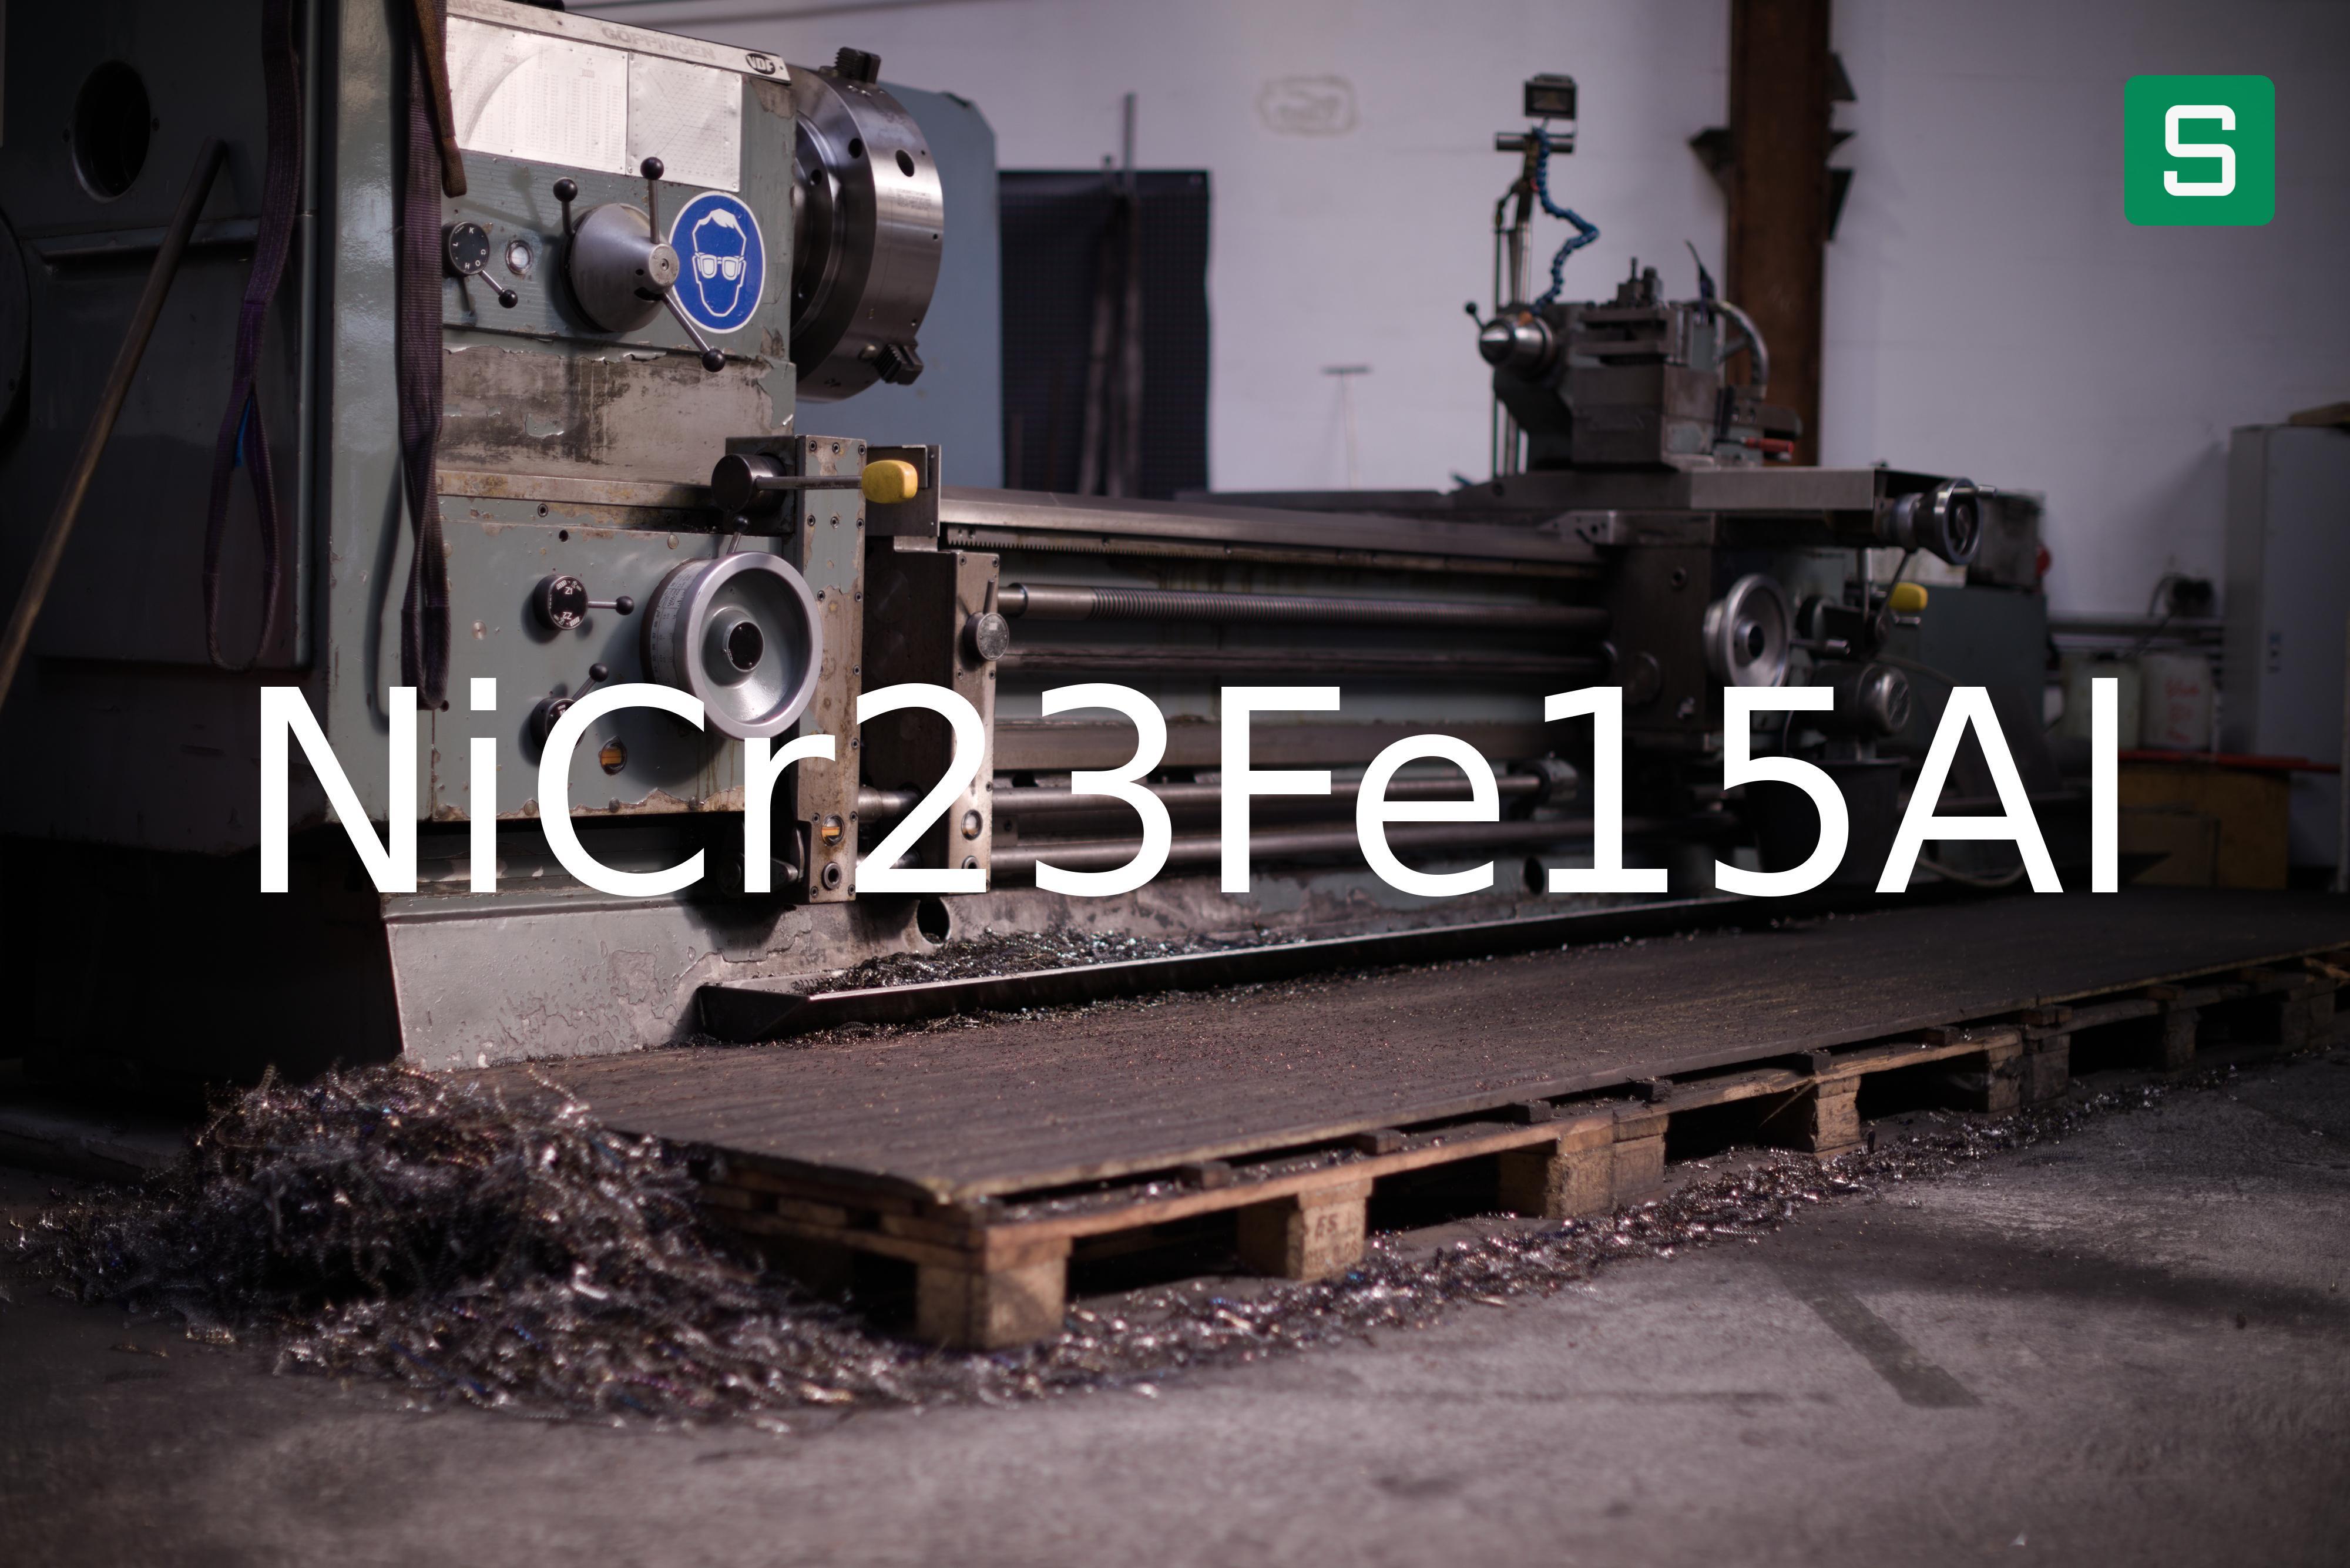 Steel Material: NiCr23Fe15Al